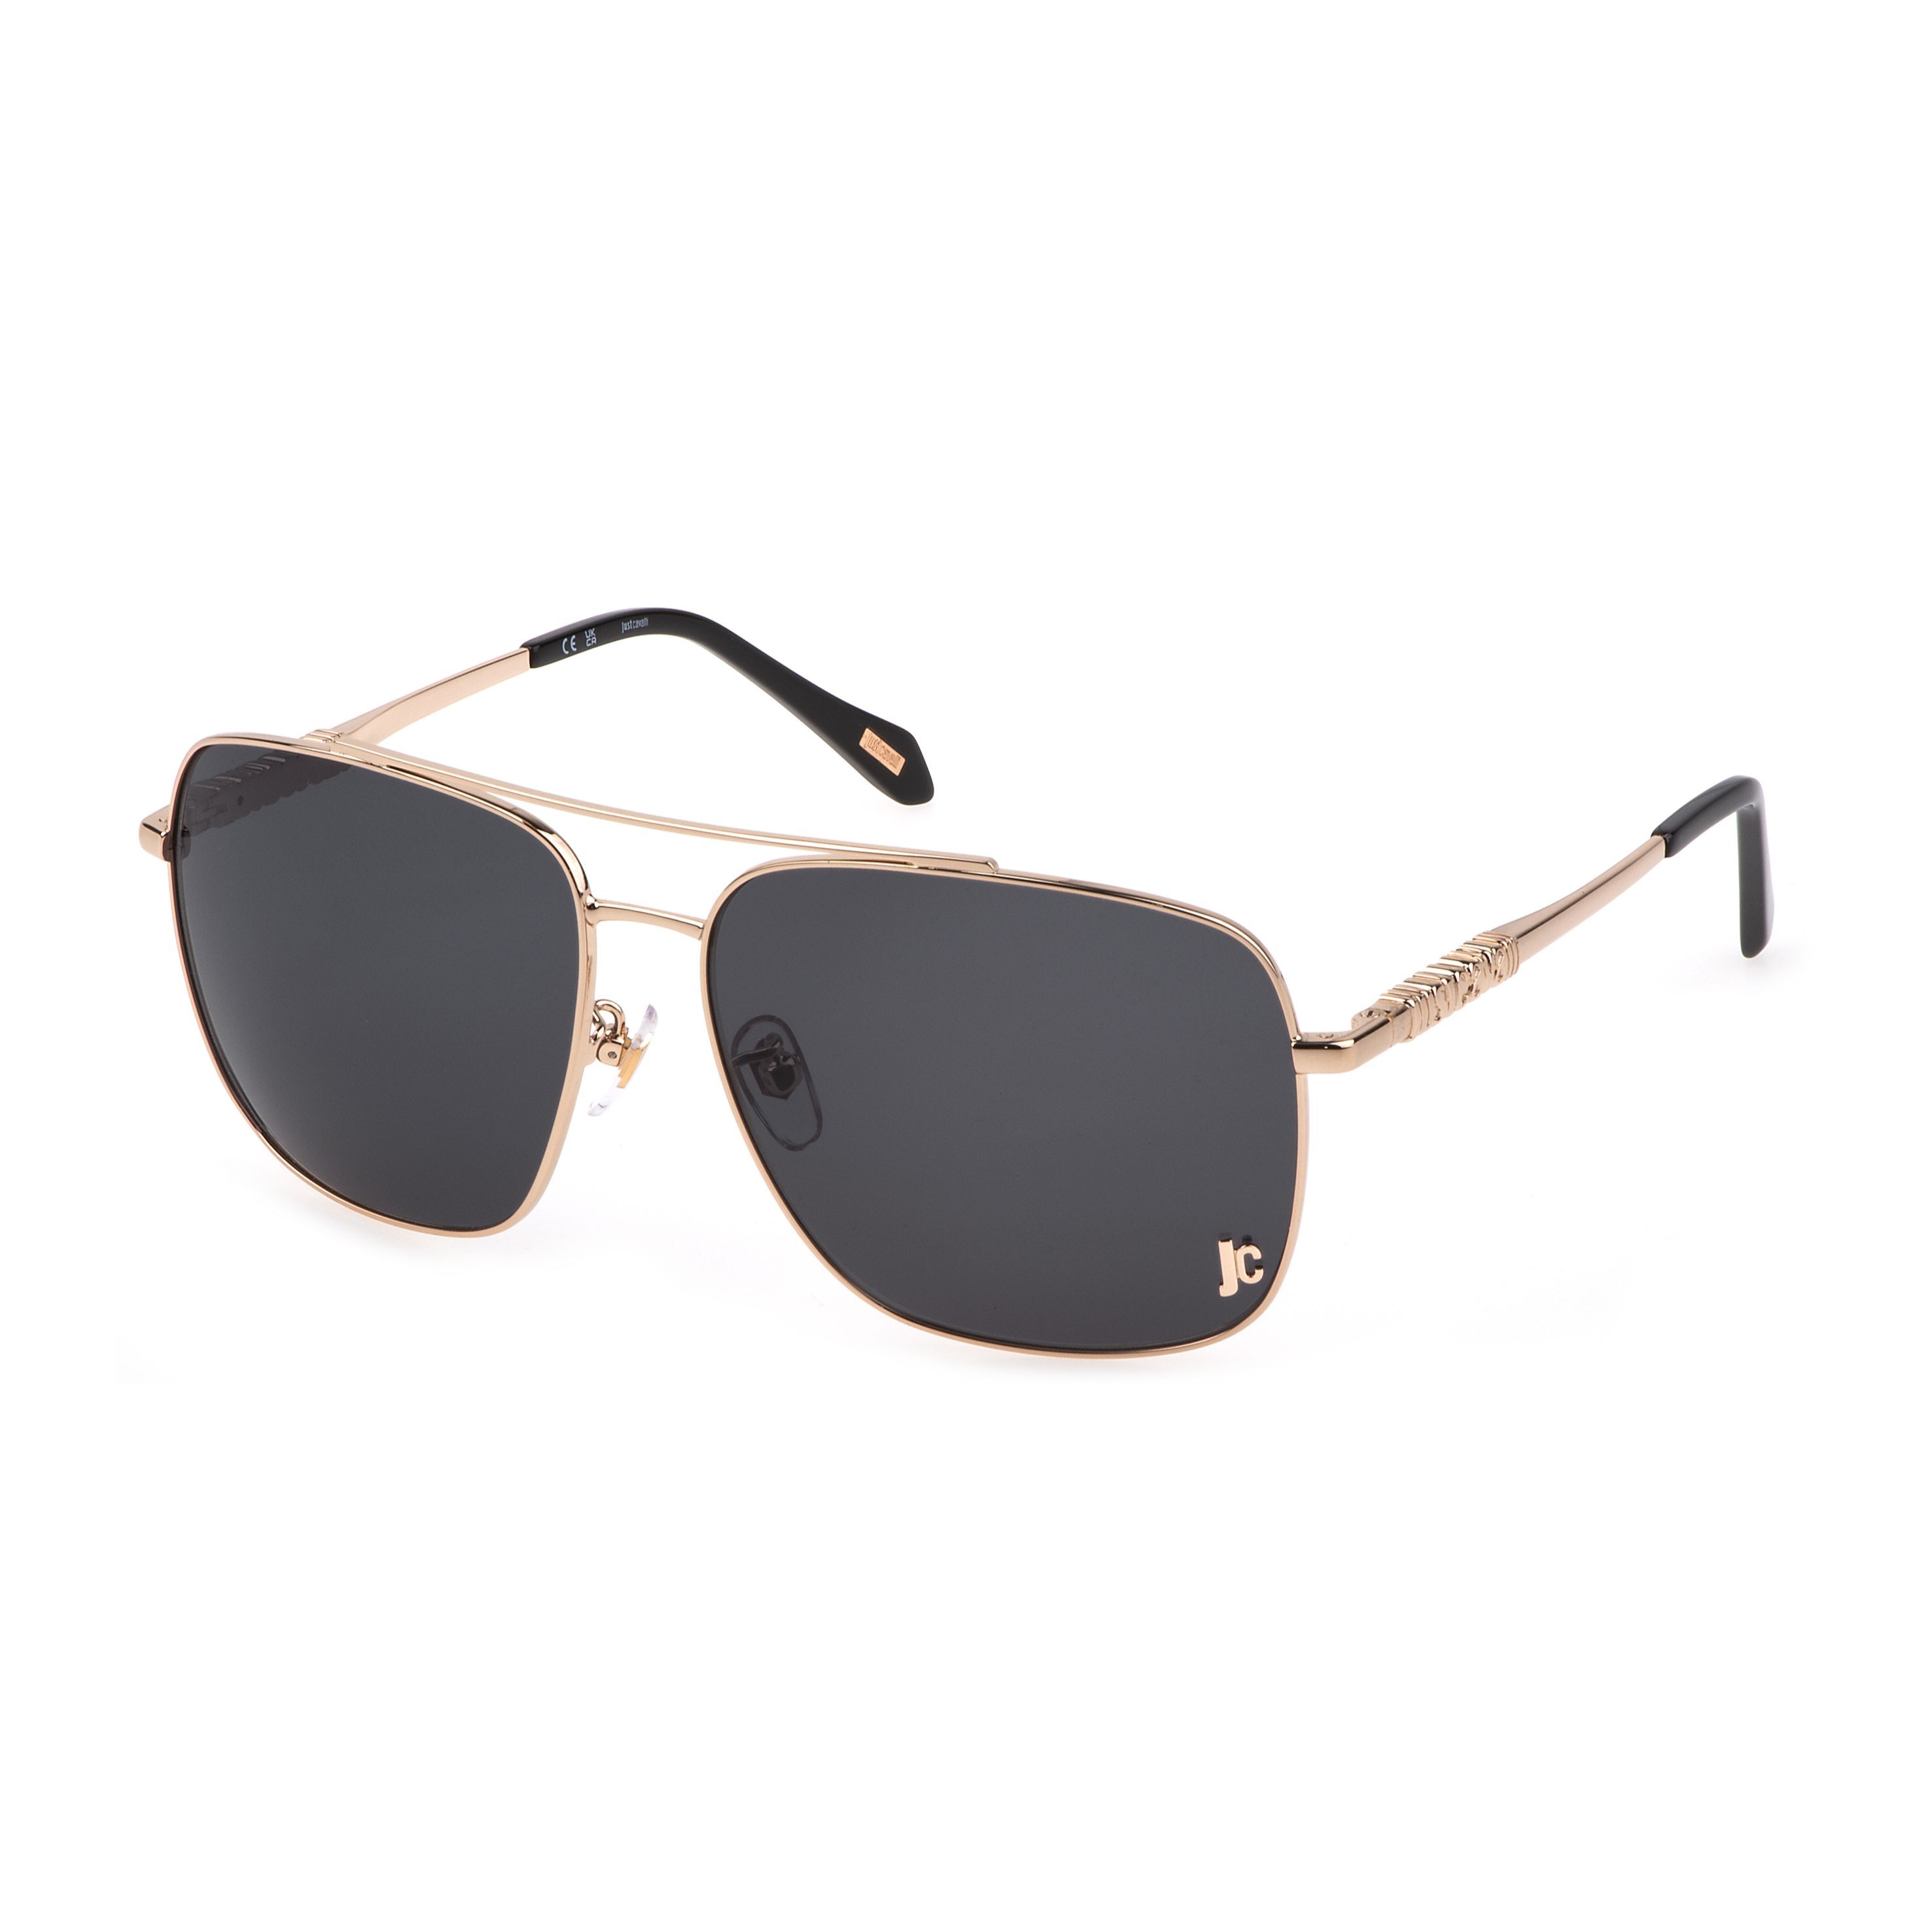 SJC030 Square Sunglasses 349 - size 61